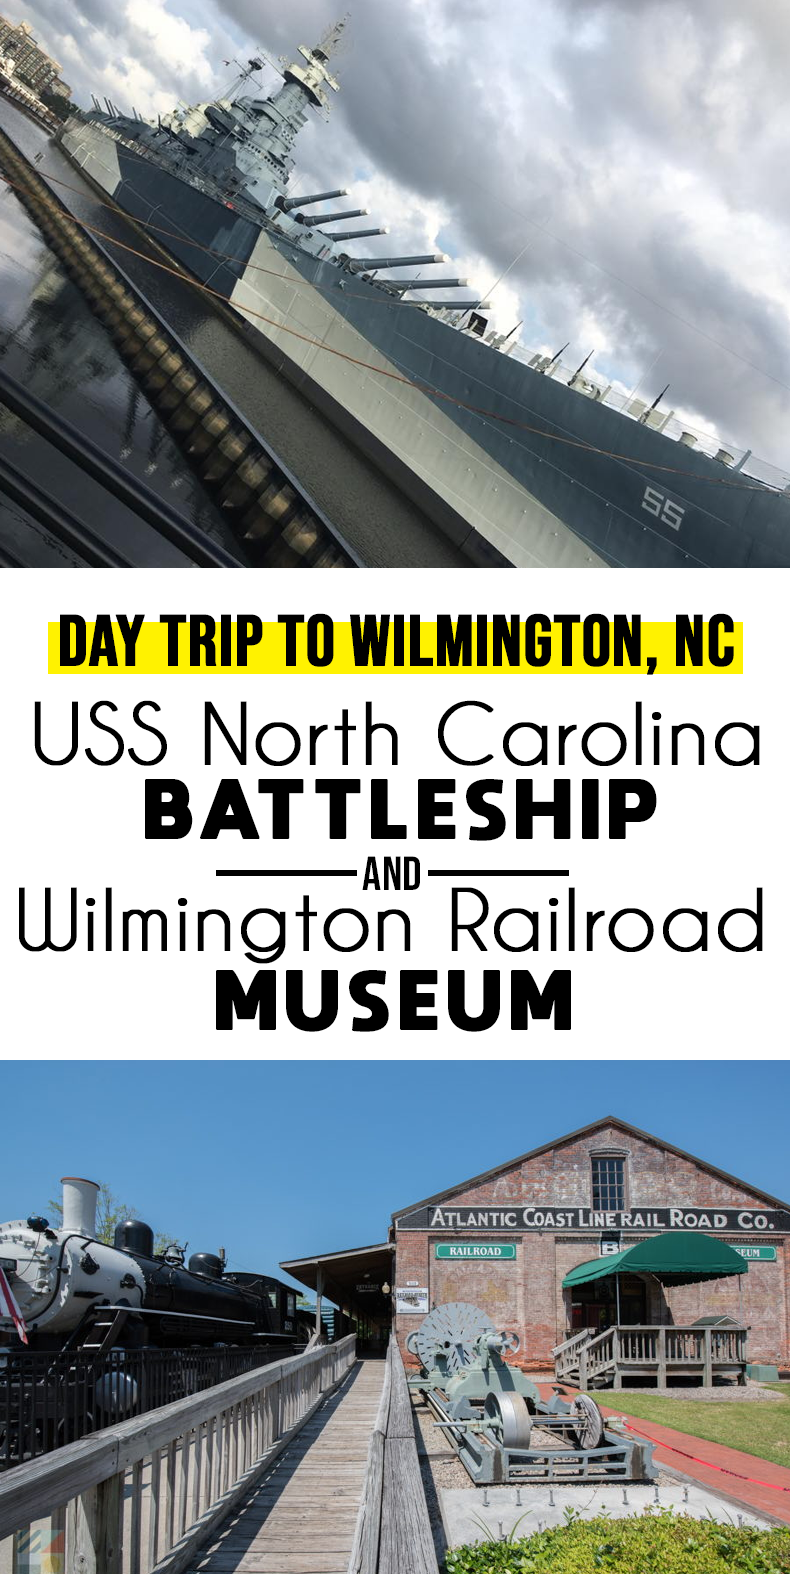 Railroad Museum & USS North Carolina Battleship | Day Trip to Wilmington NC